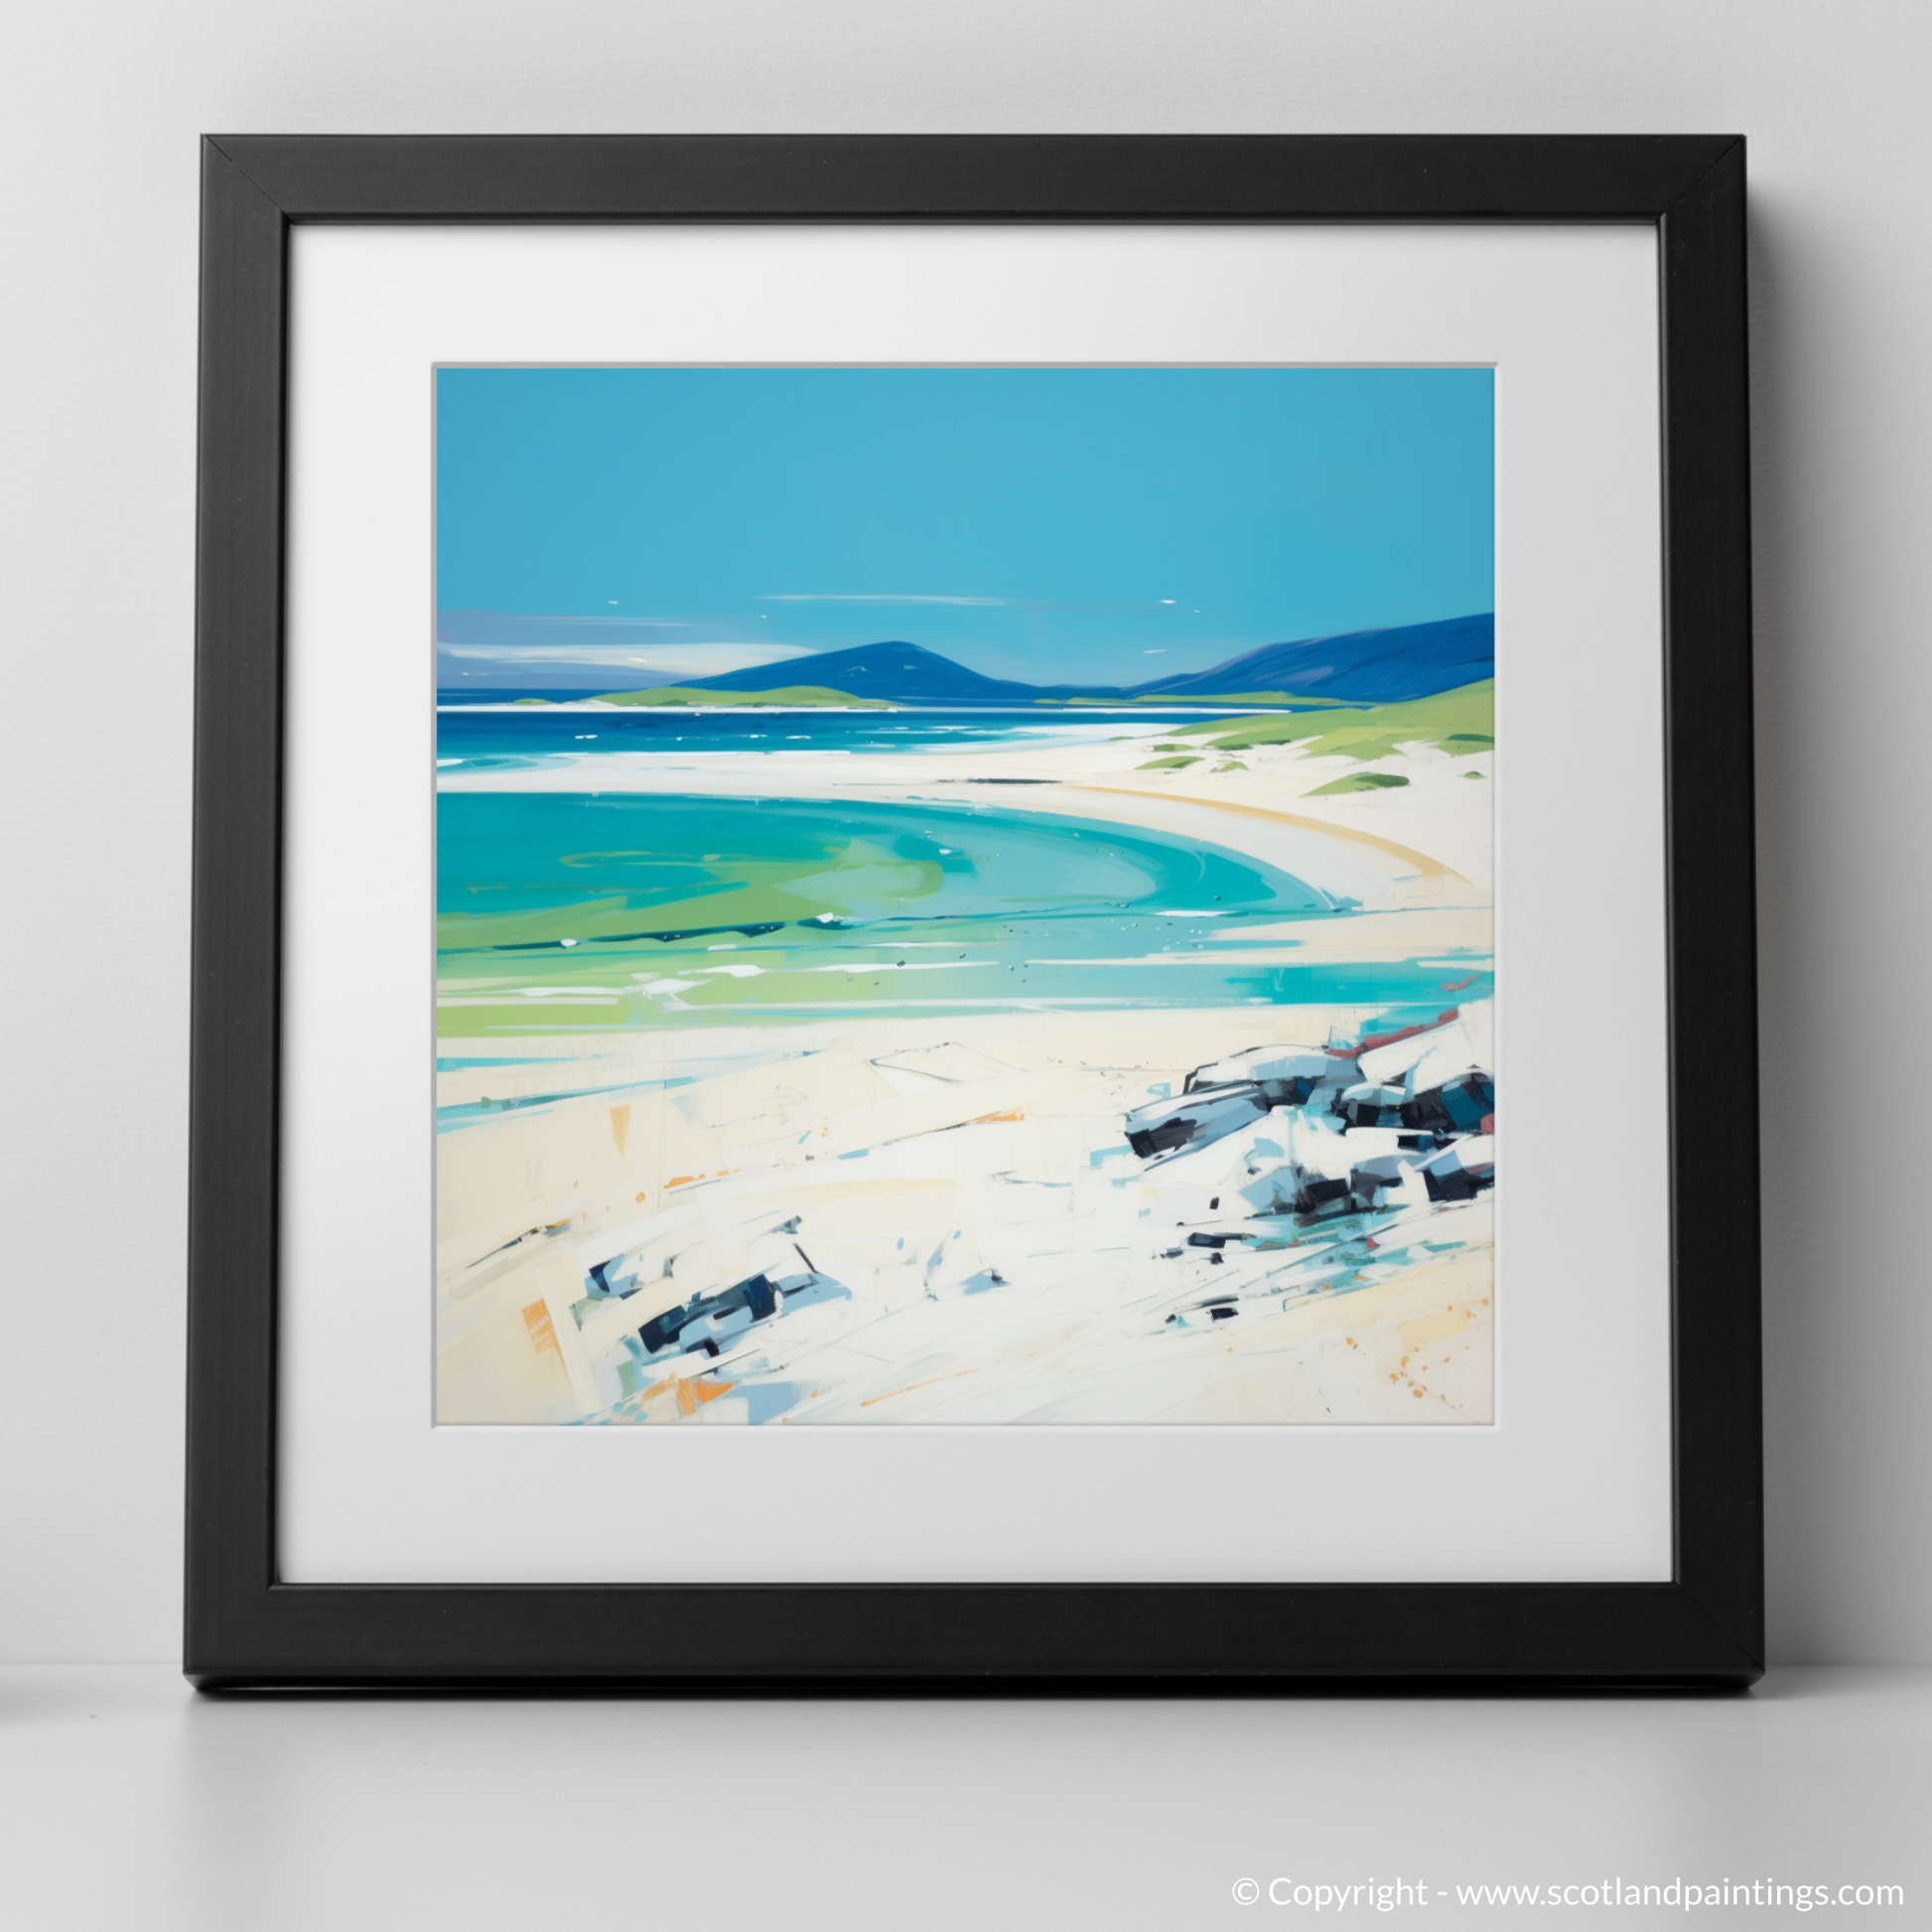 Art Print of Luskentyre Beach, Isle of Harris with a black frame